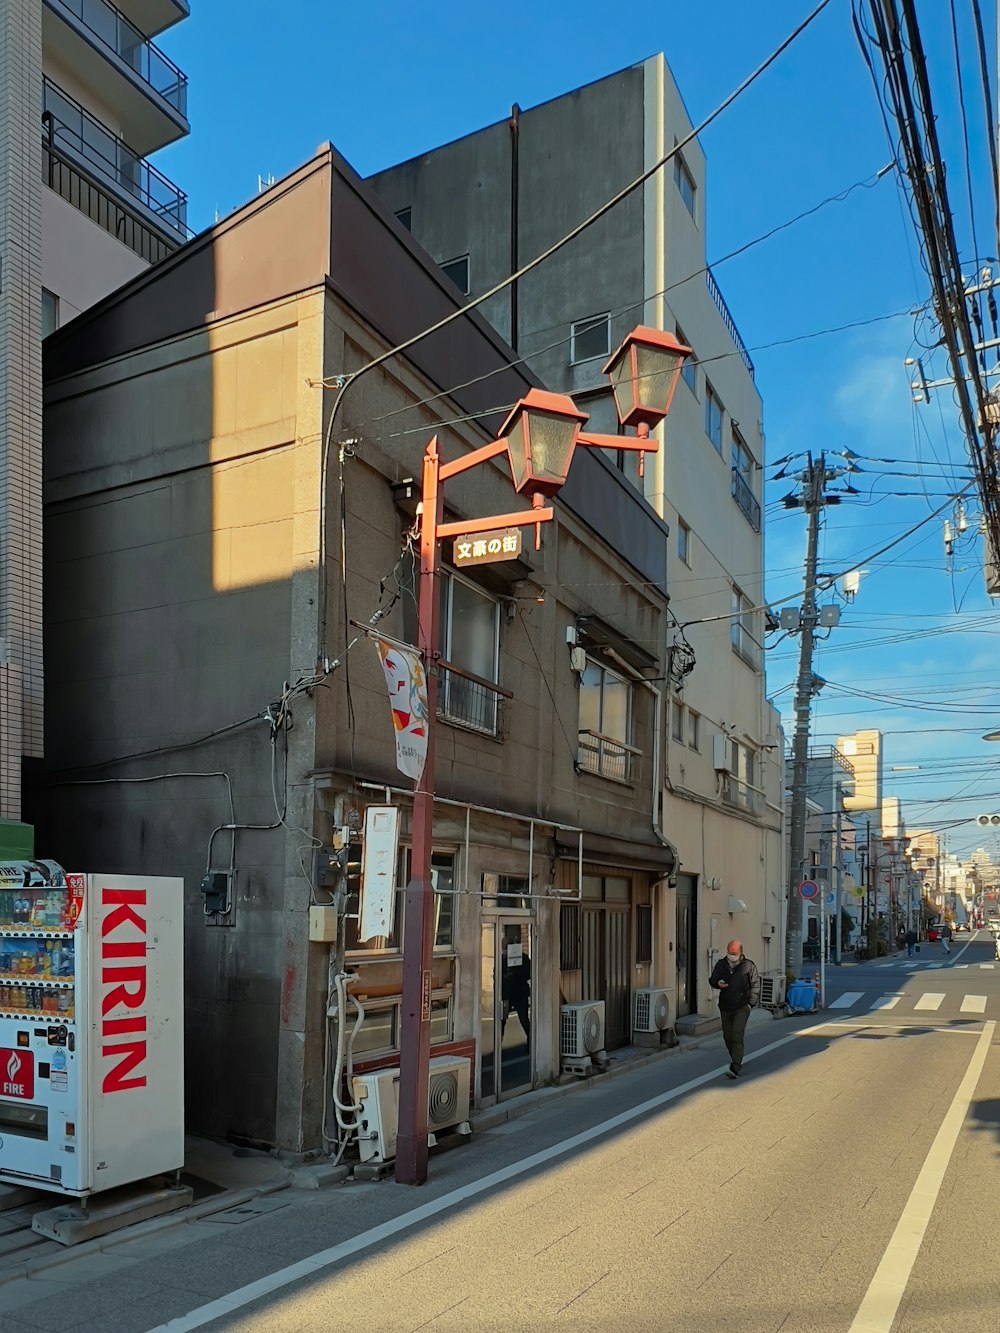 Japan Vending Machine Pictures | Download Free Images on Unsplash